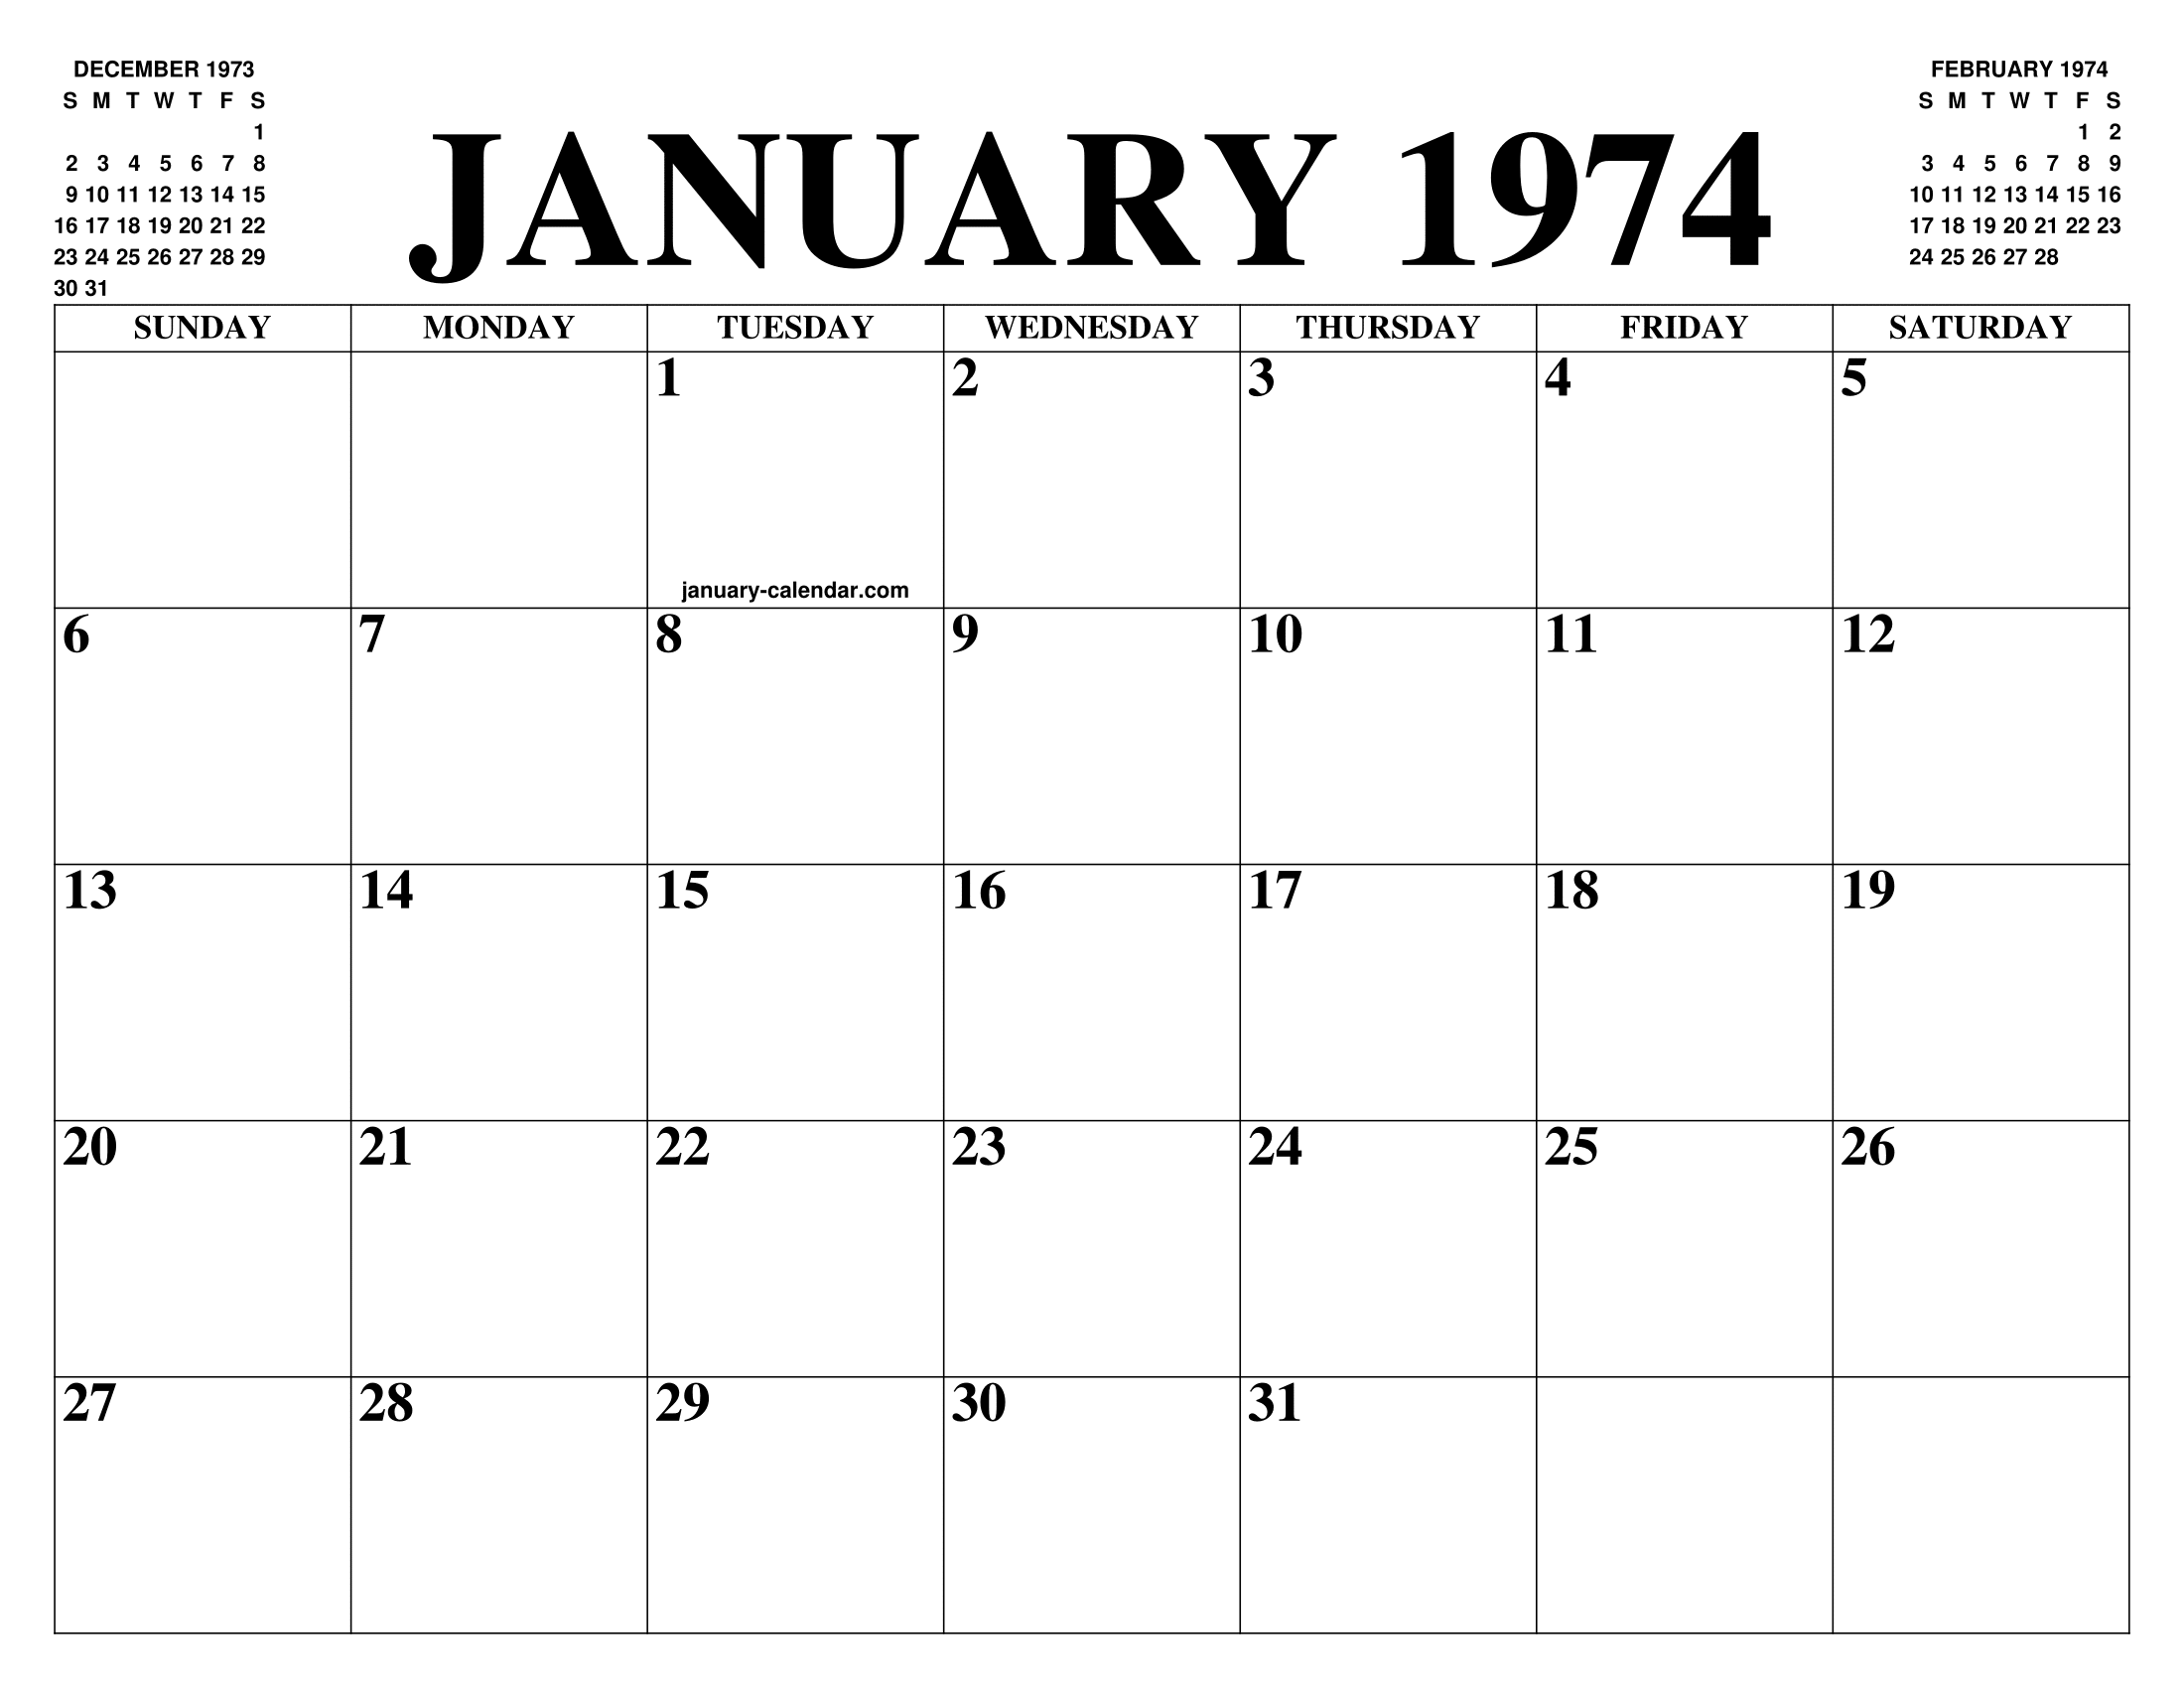 JANUARY 1974 CALENDAR OF THE MONTH: FREE PRINTABLE JANUARY CALENDAR OF